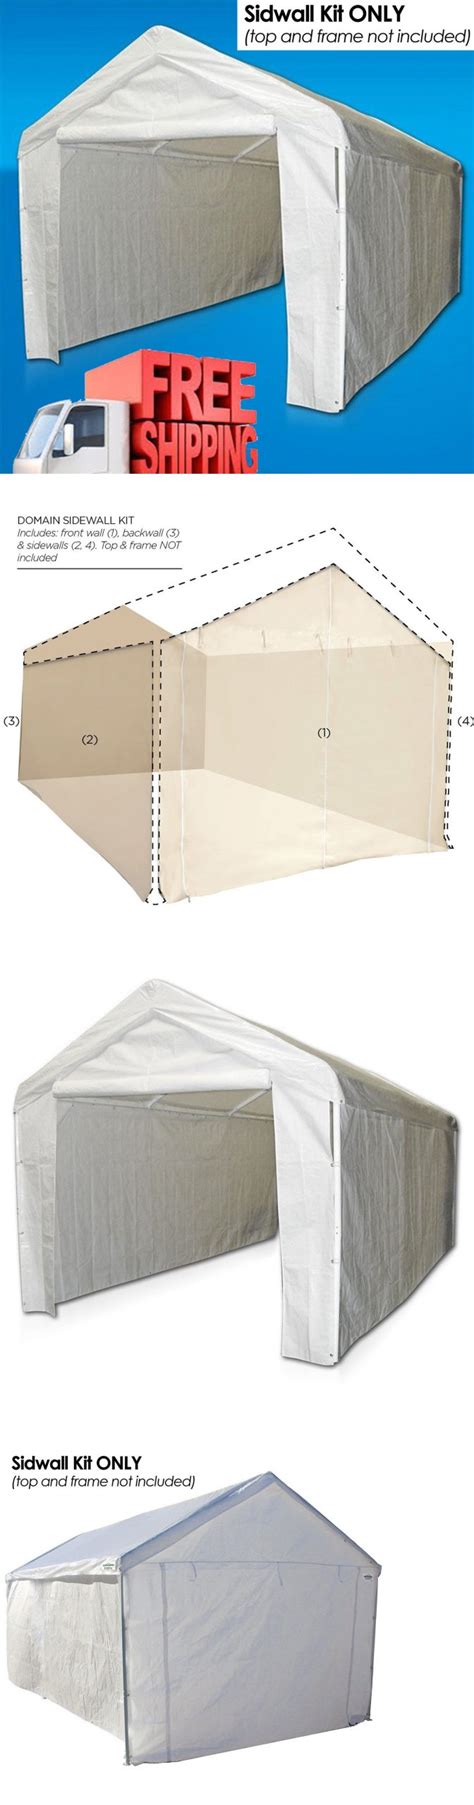 awnings  canopies  canopy side wall kit  caravan domain portable decorafit